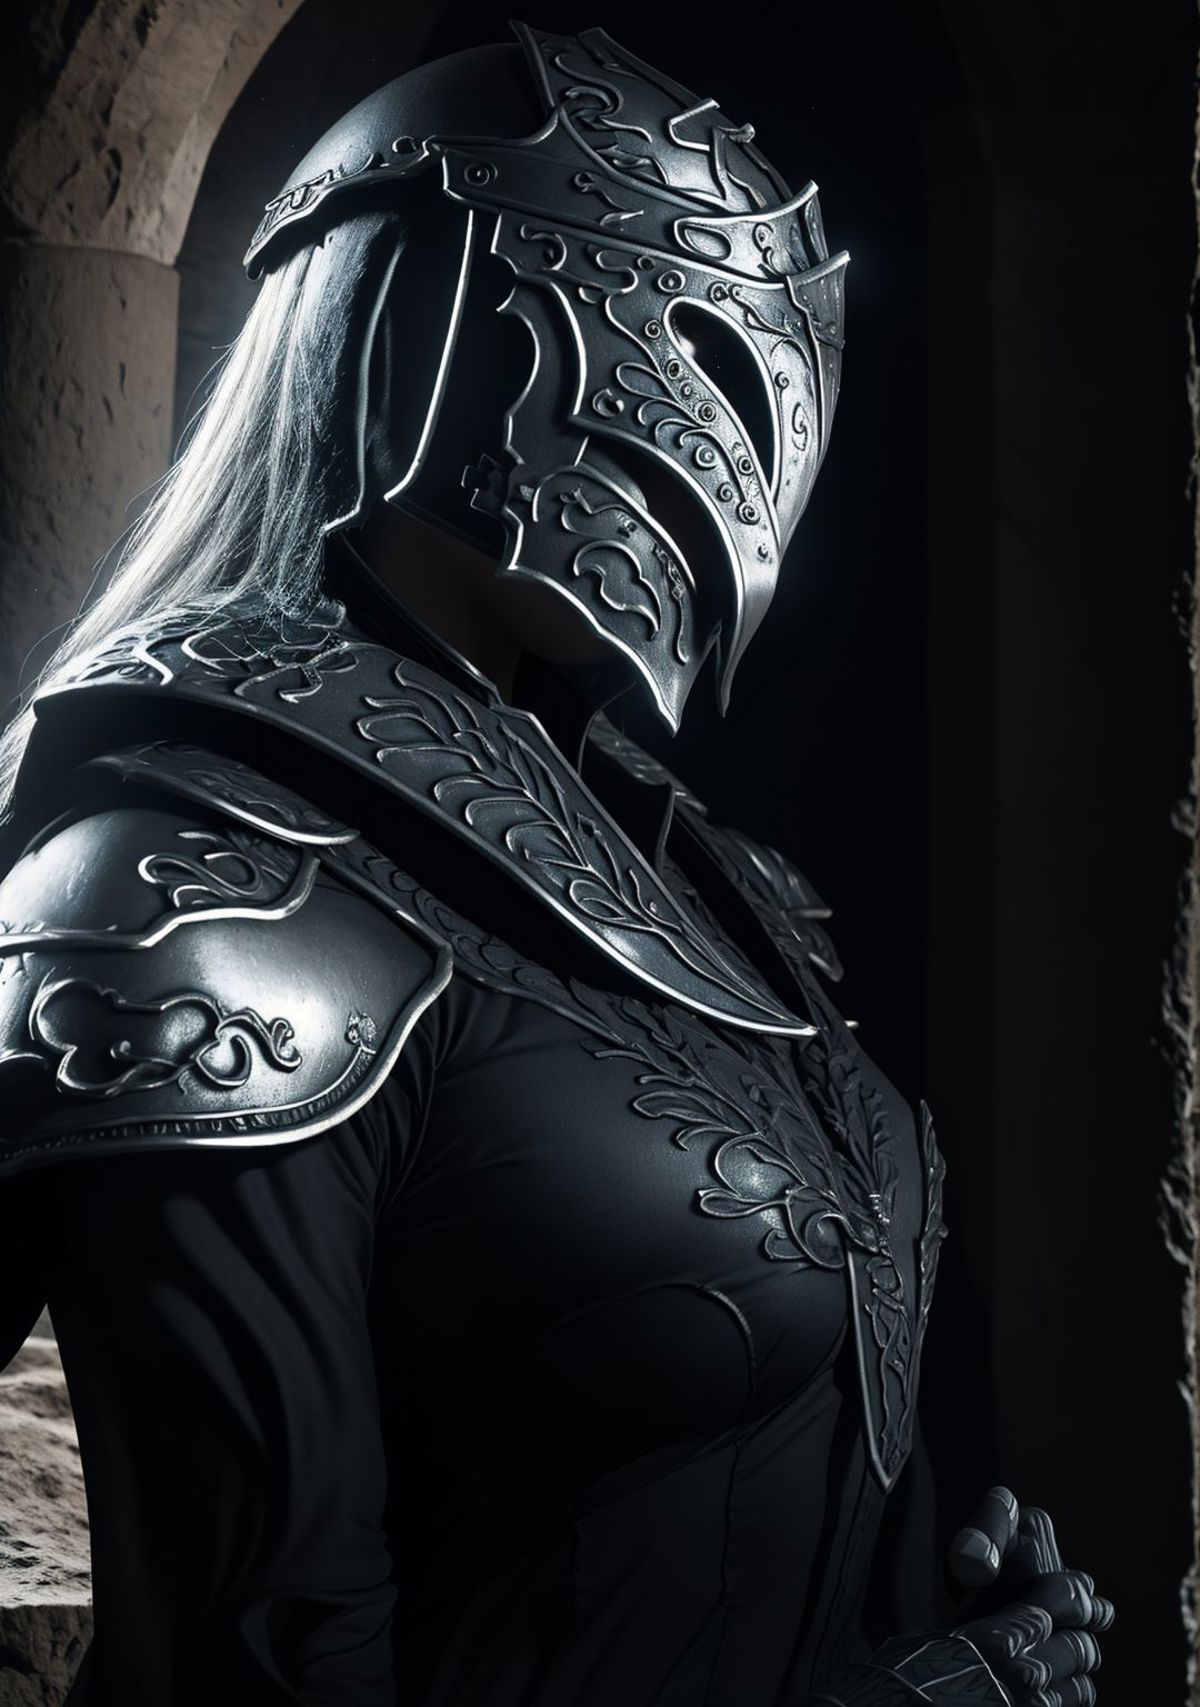 Yuria of Londor | Dark Souls 3 image by marusame